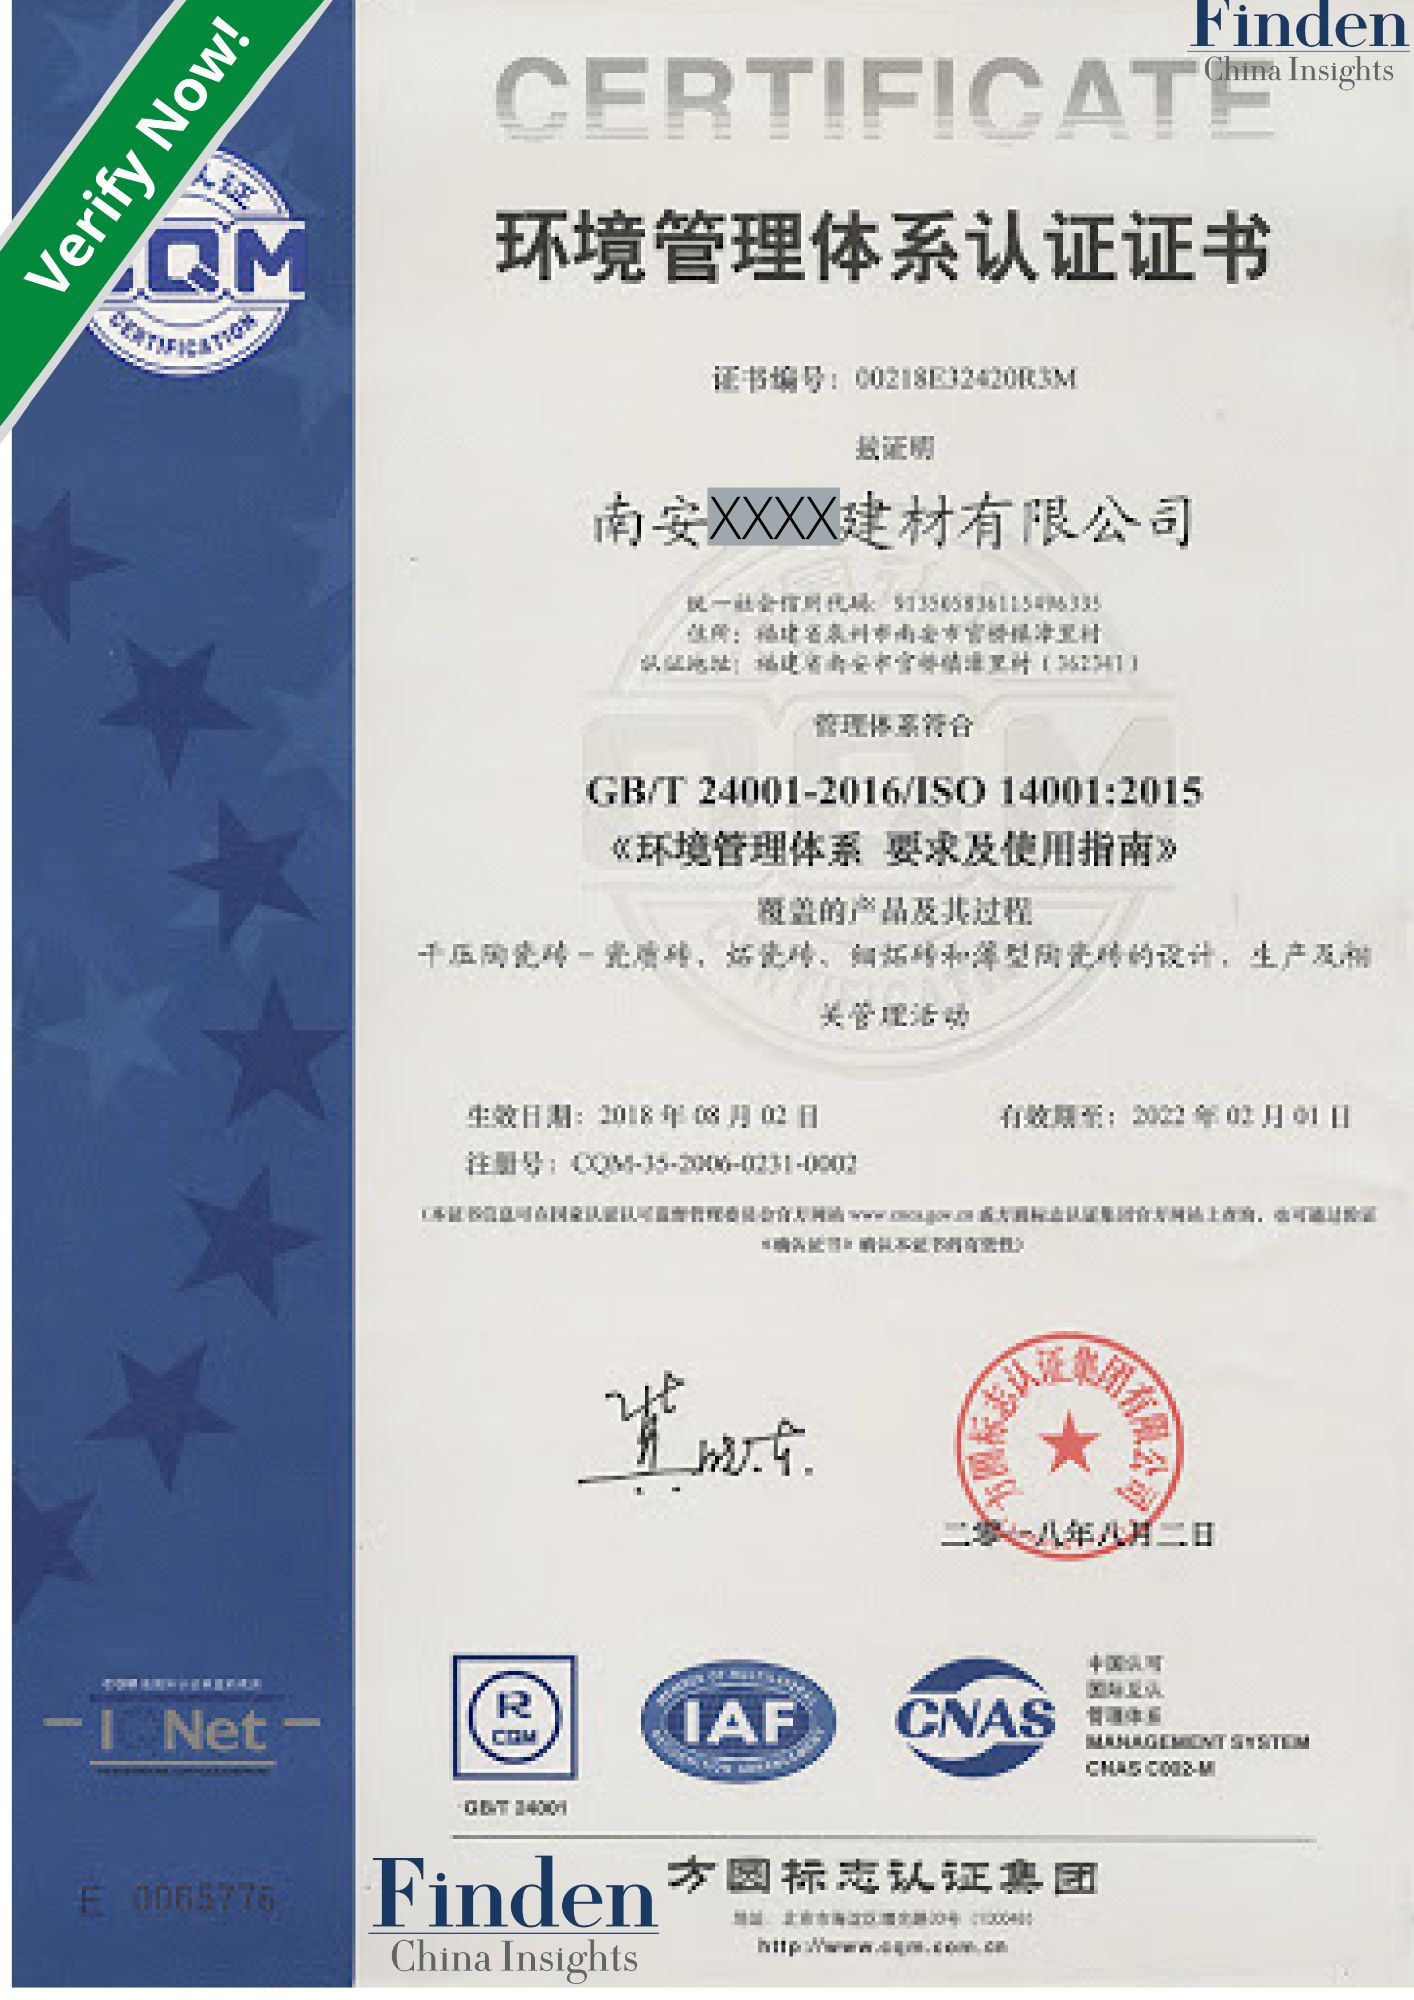 China ISO 14001 Certificate Verification